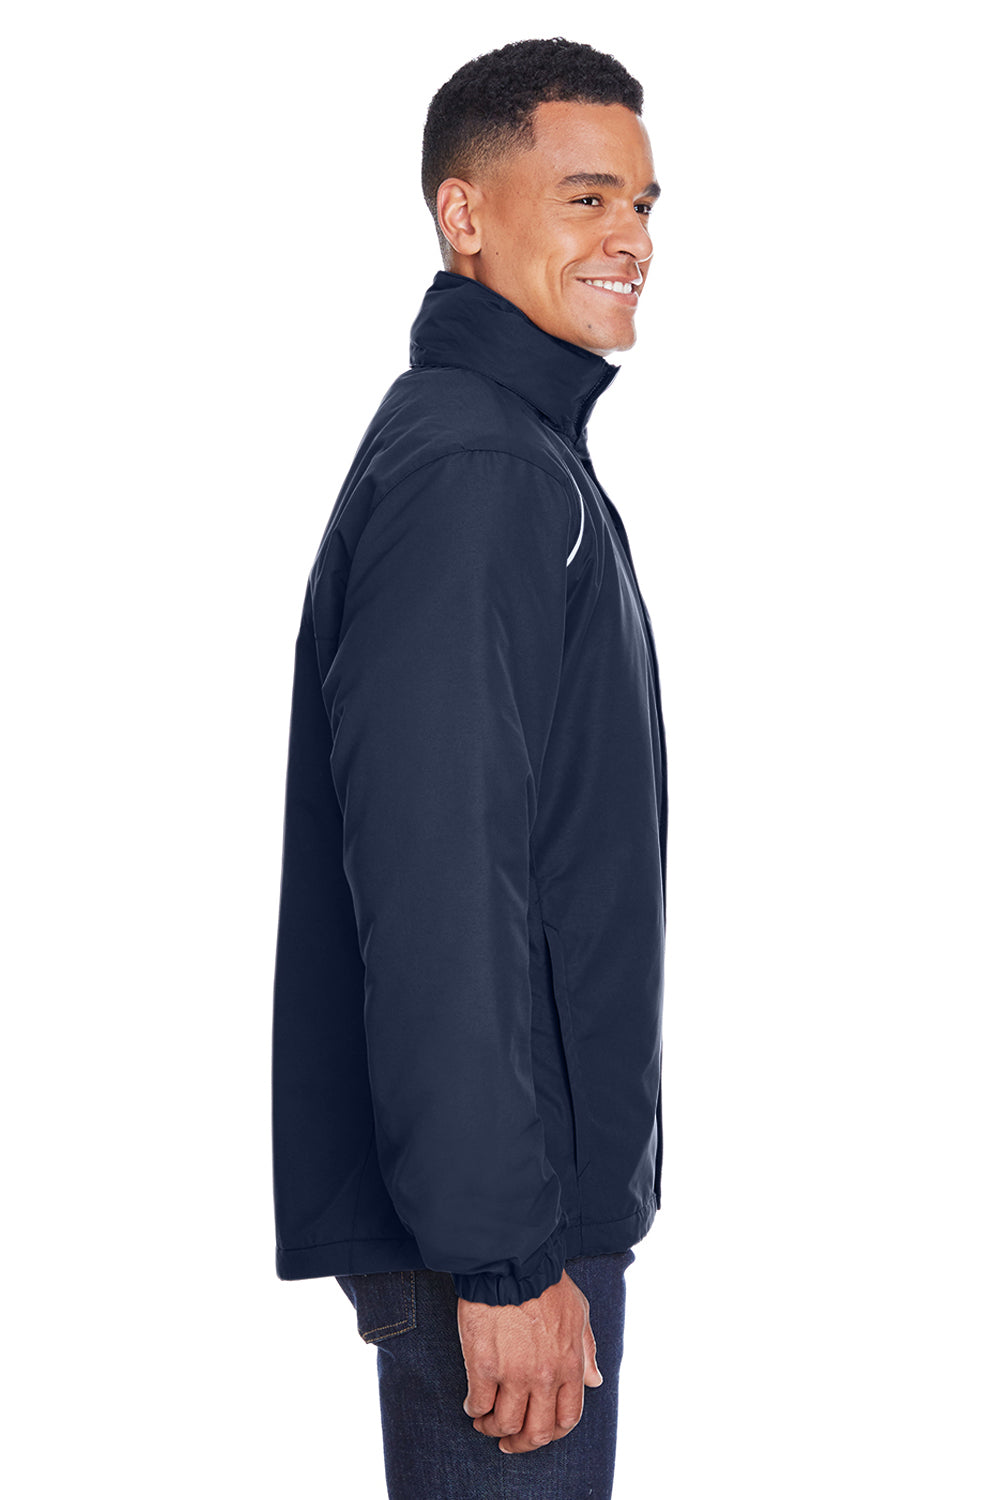 Core 365 88224 Mens Profile Water Resistant Full Zip Hooded Jacket Navy Blue Side